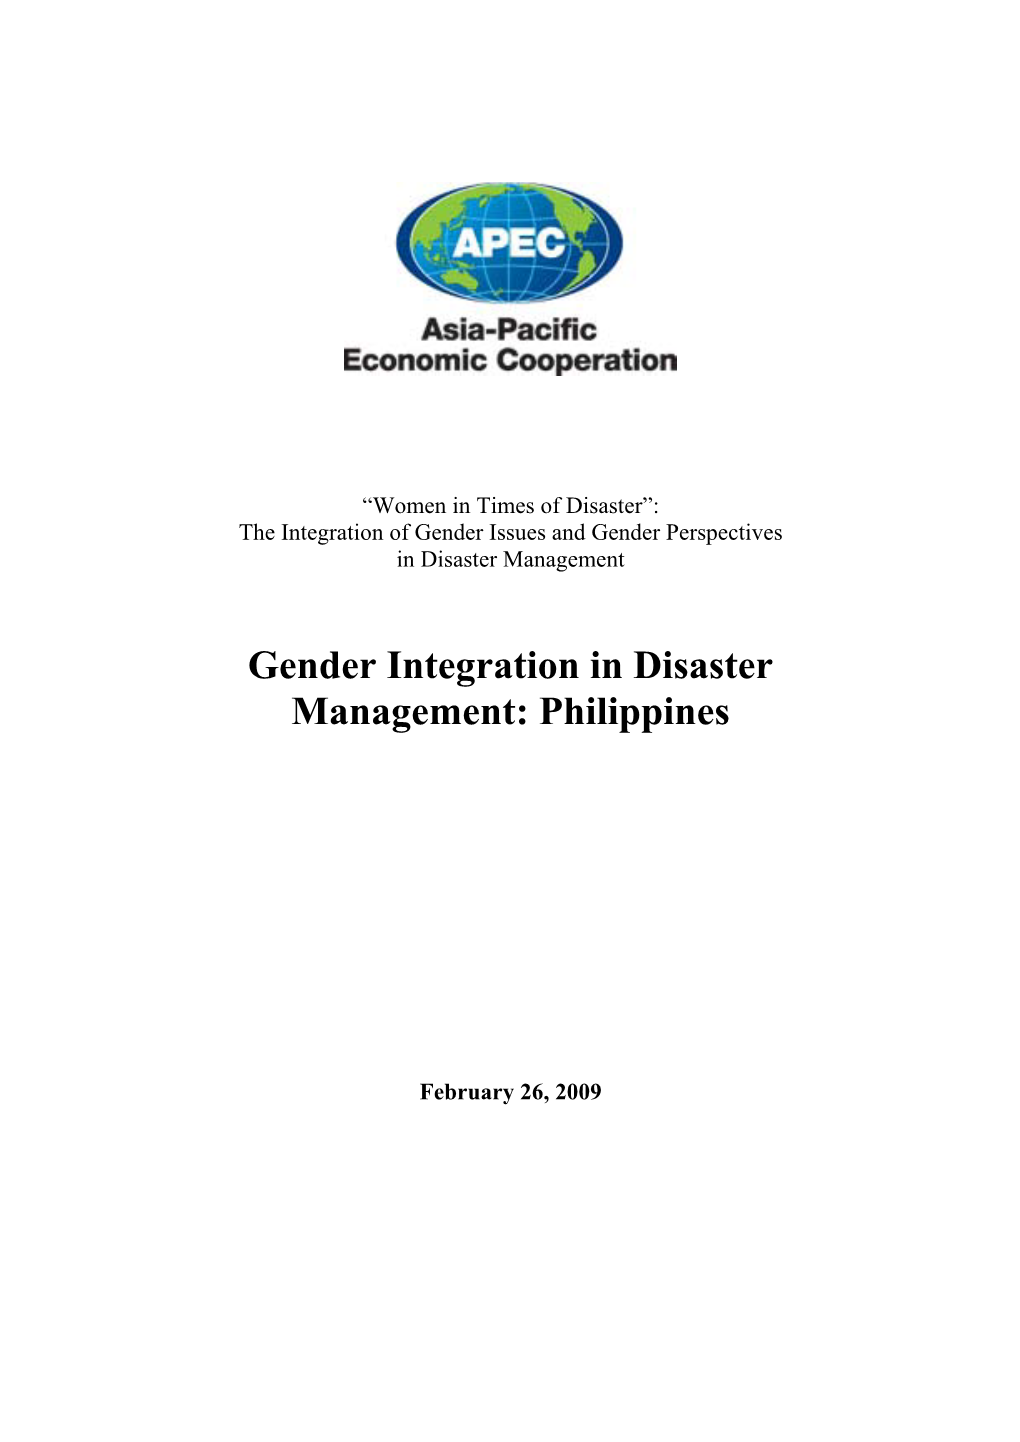 Gender Integration in Disaster Management: Philippines